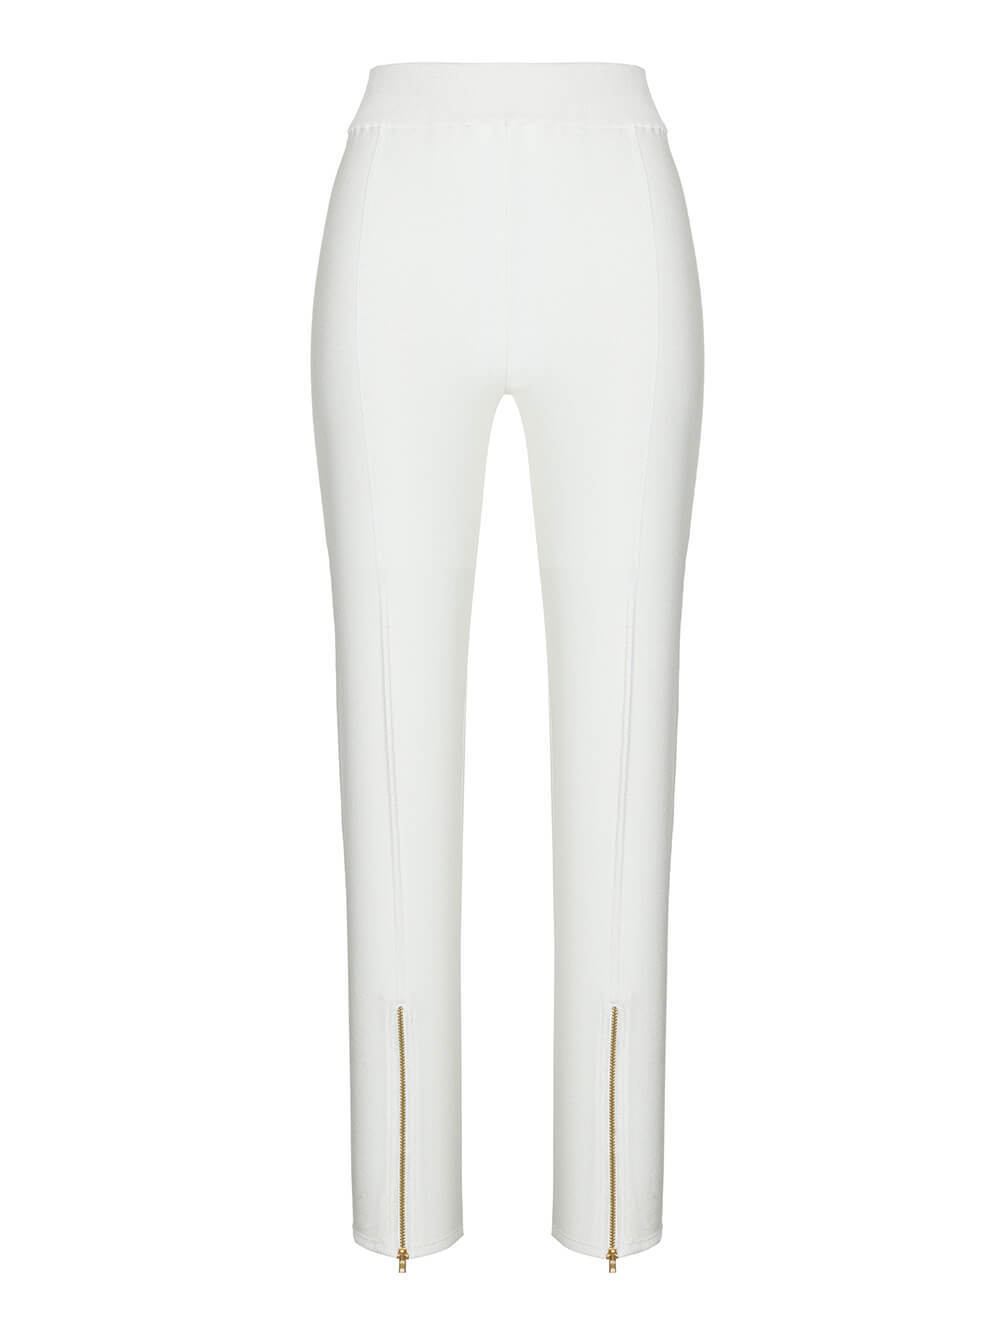 Женские брюки молочного цвета из 100% шелка - фото 1